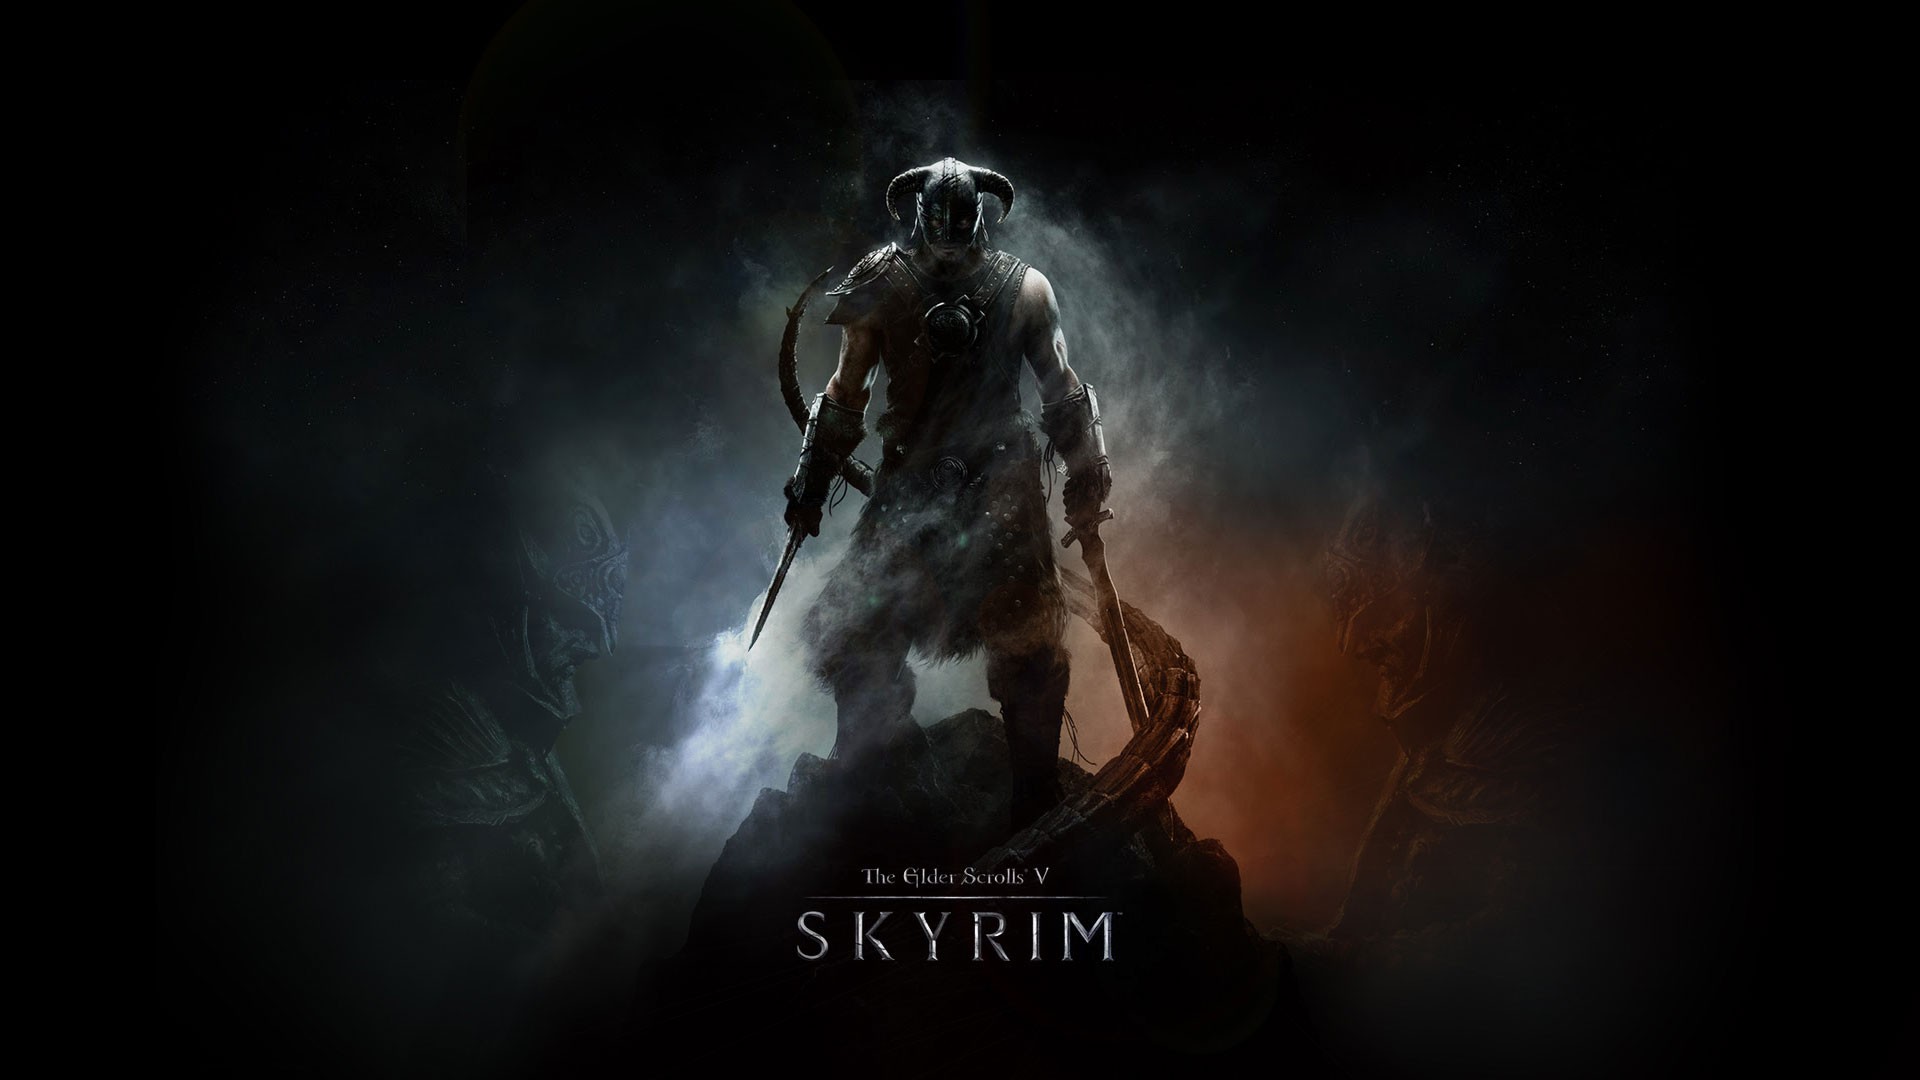 Video Games The Elder Scrolls V Skyrim Sword Dragonborn 2011 Year Dark Fantasy Art Video Game Art 1920x1080